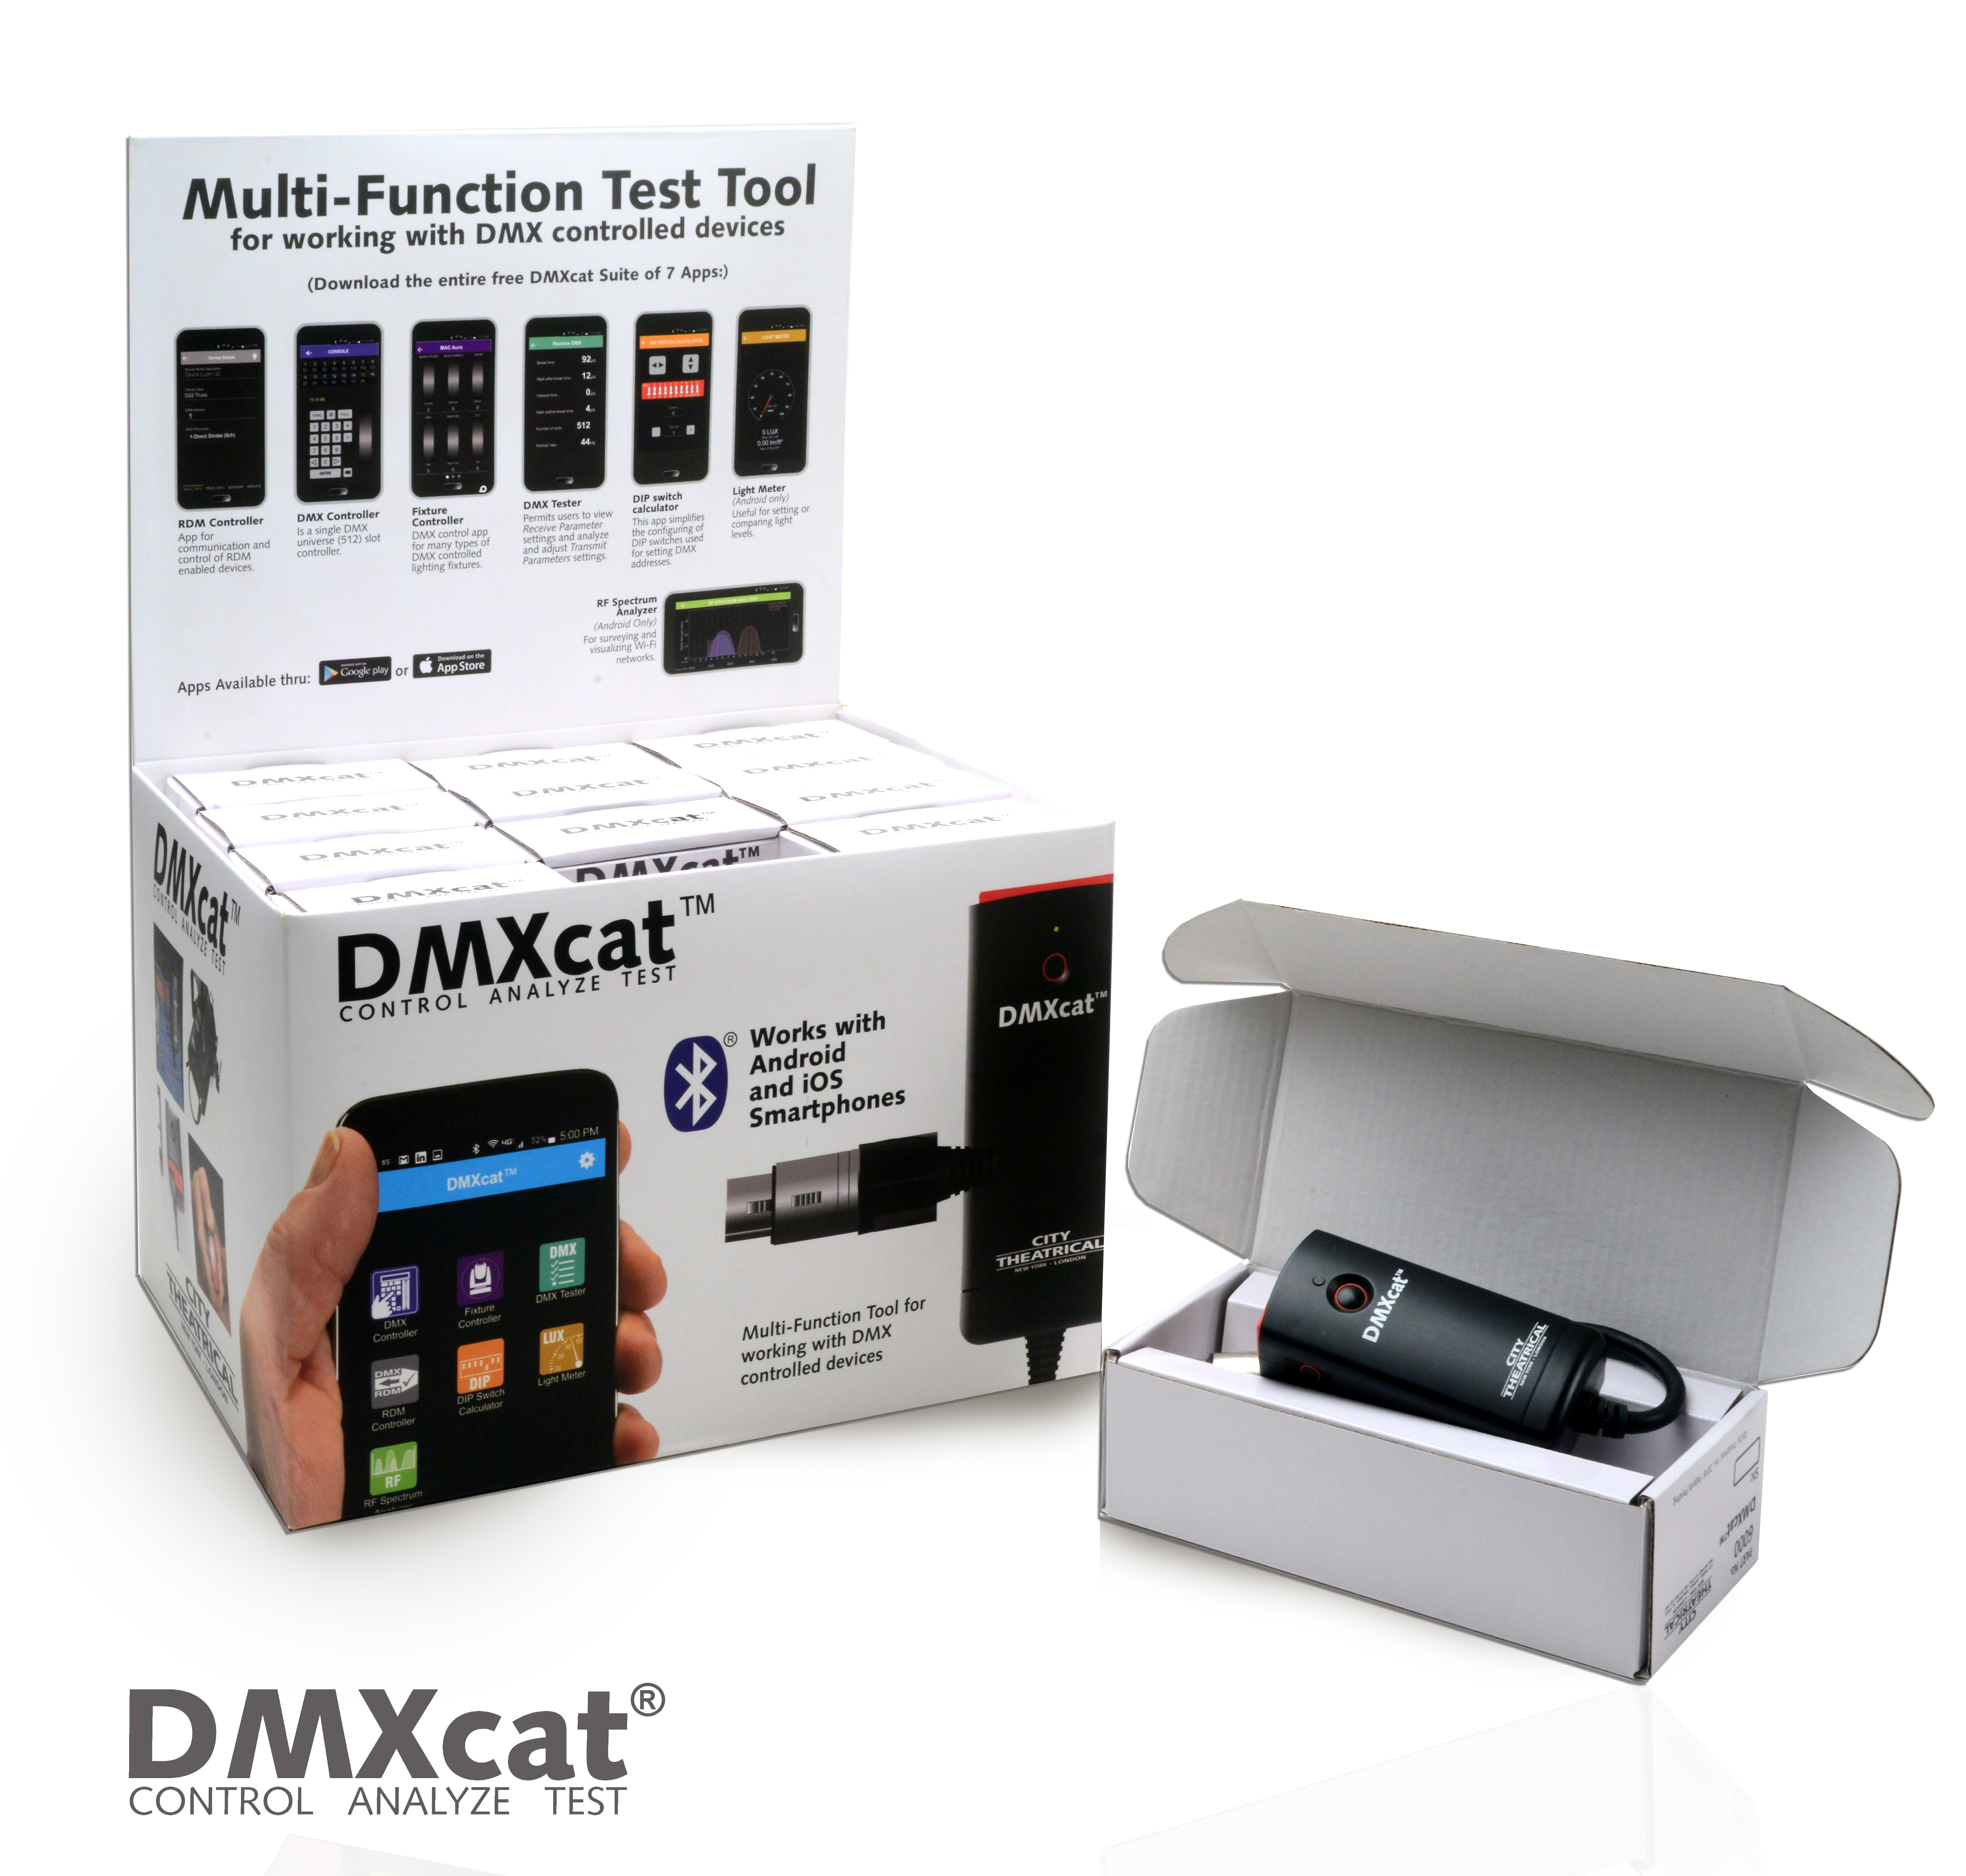 DMXcat Packaging